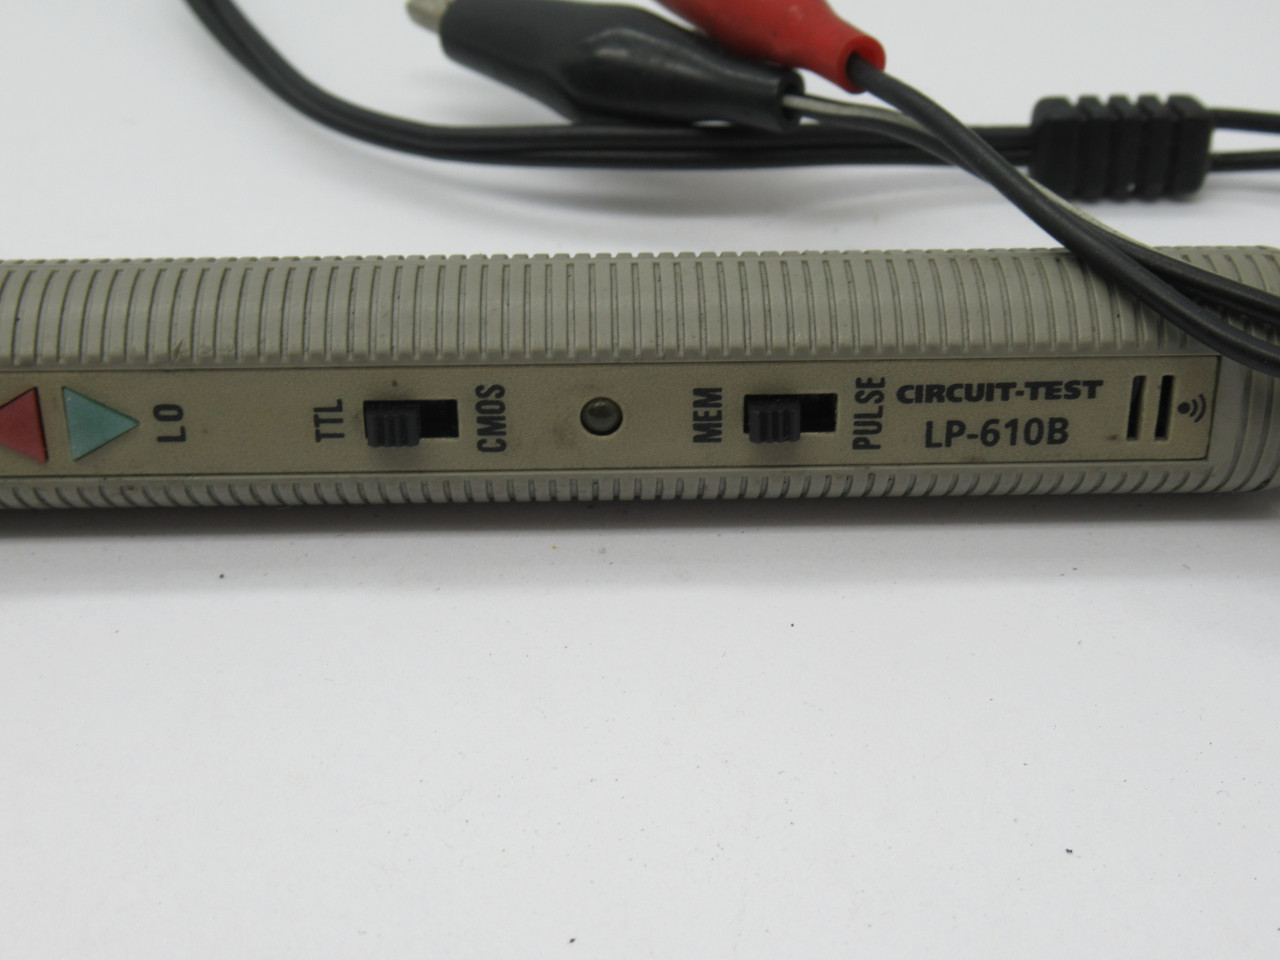 Circuit-Test LP-610B Logic Probe With Buzzer 4-18VDC 20V 25MHz 10M ohm USED